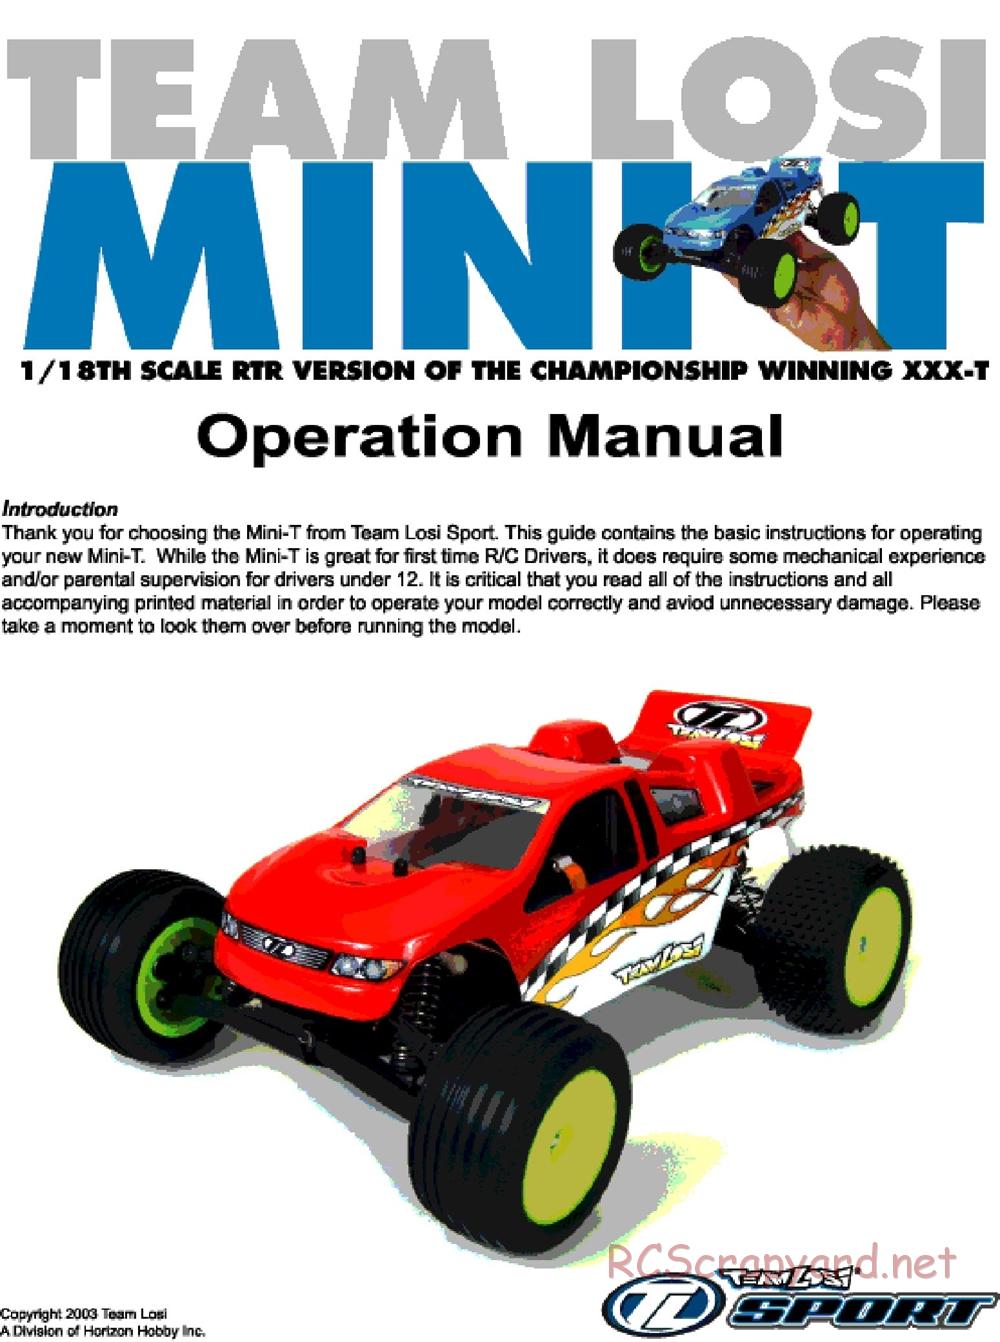 Team Losi - Mini-T - Manual - Page 1